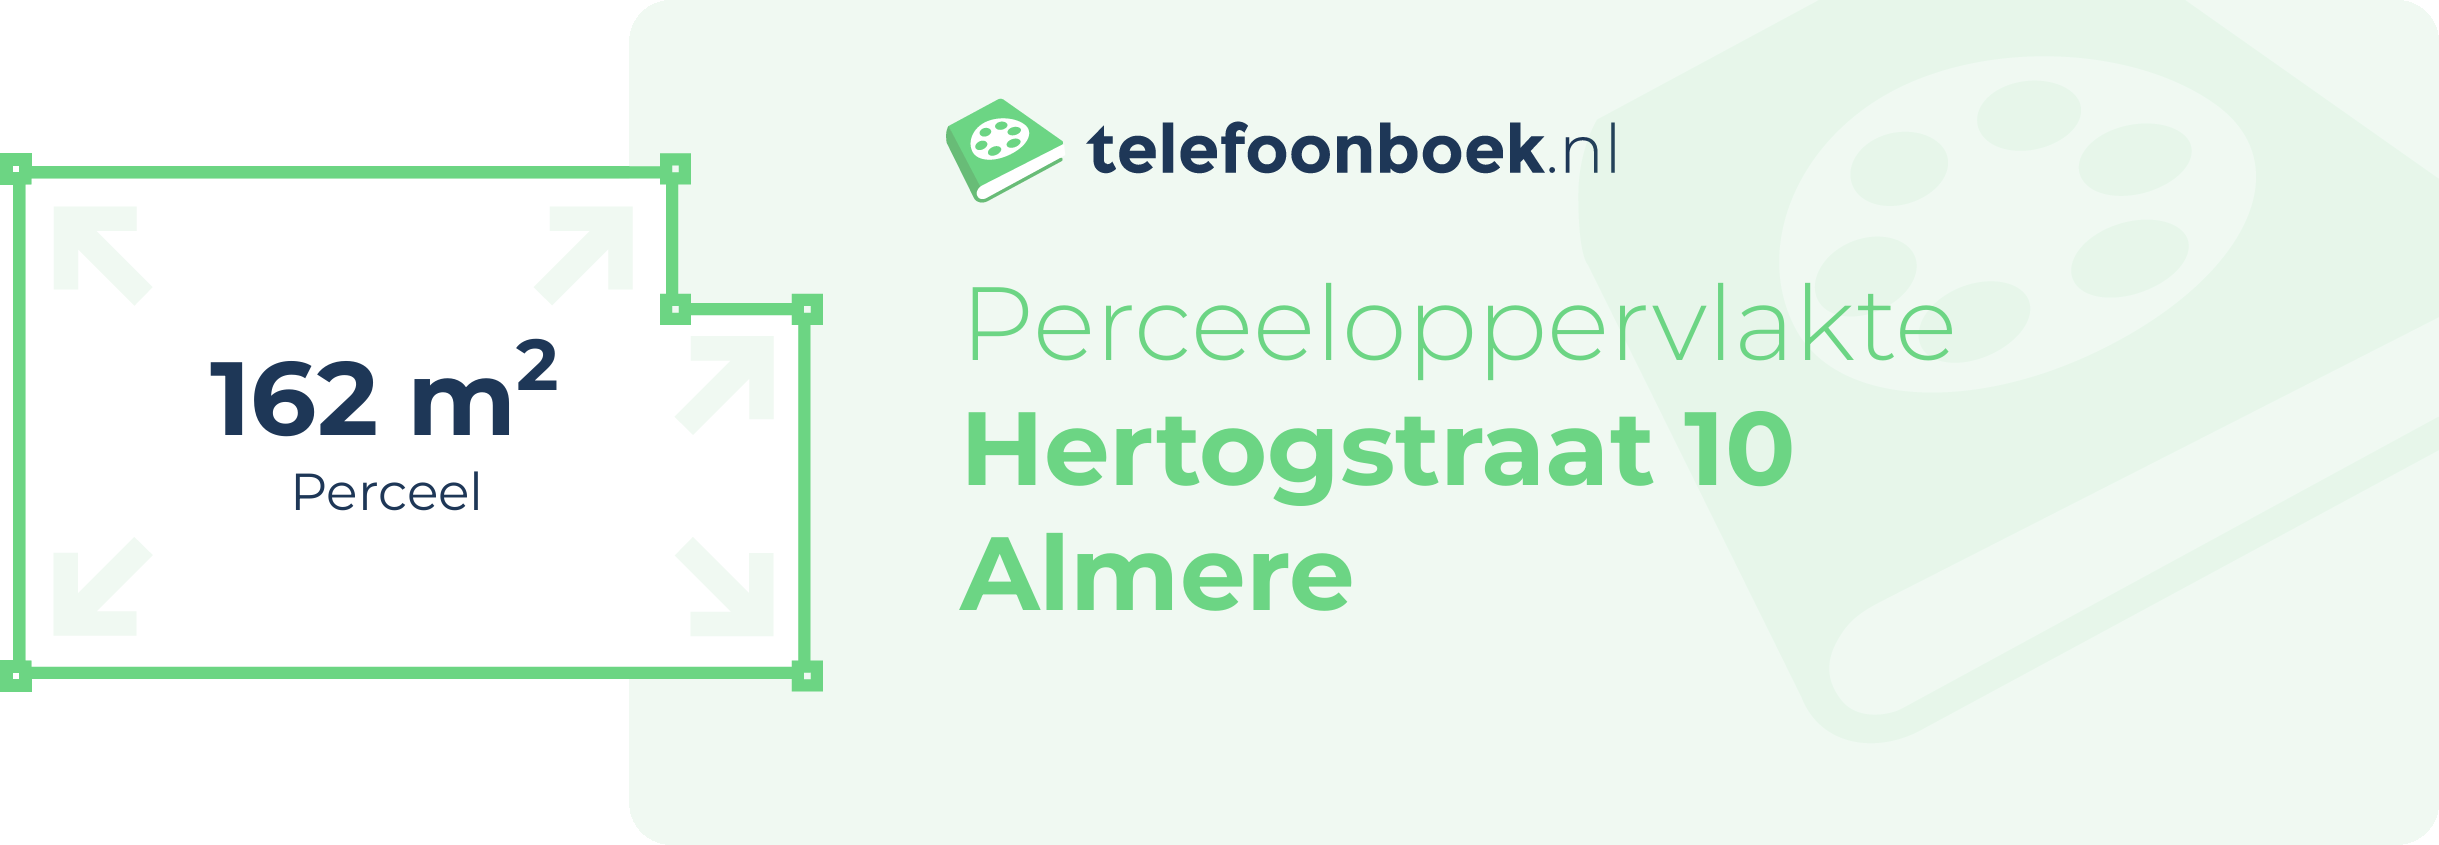 Perceeloppervlakte Hertogstraat 10 Almere